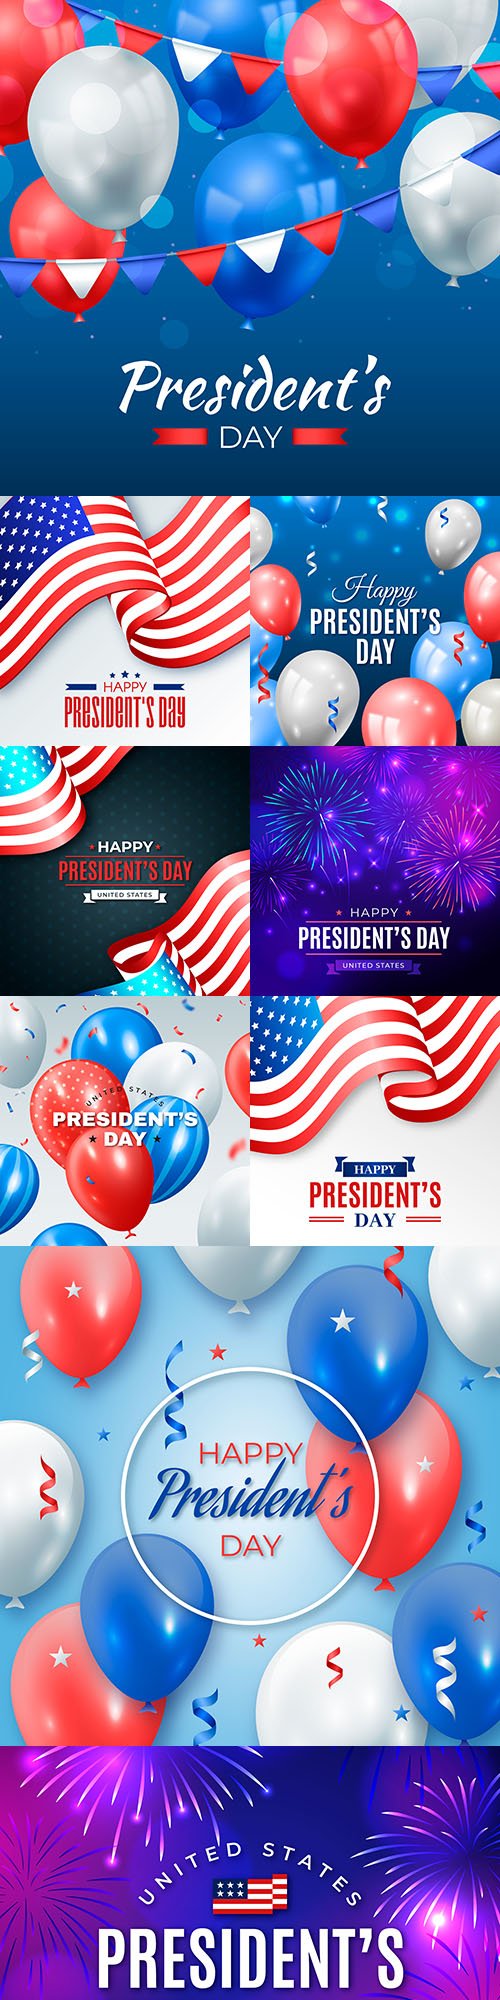 Happy President's Day decorative illustrations 4